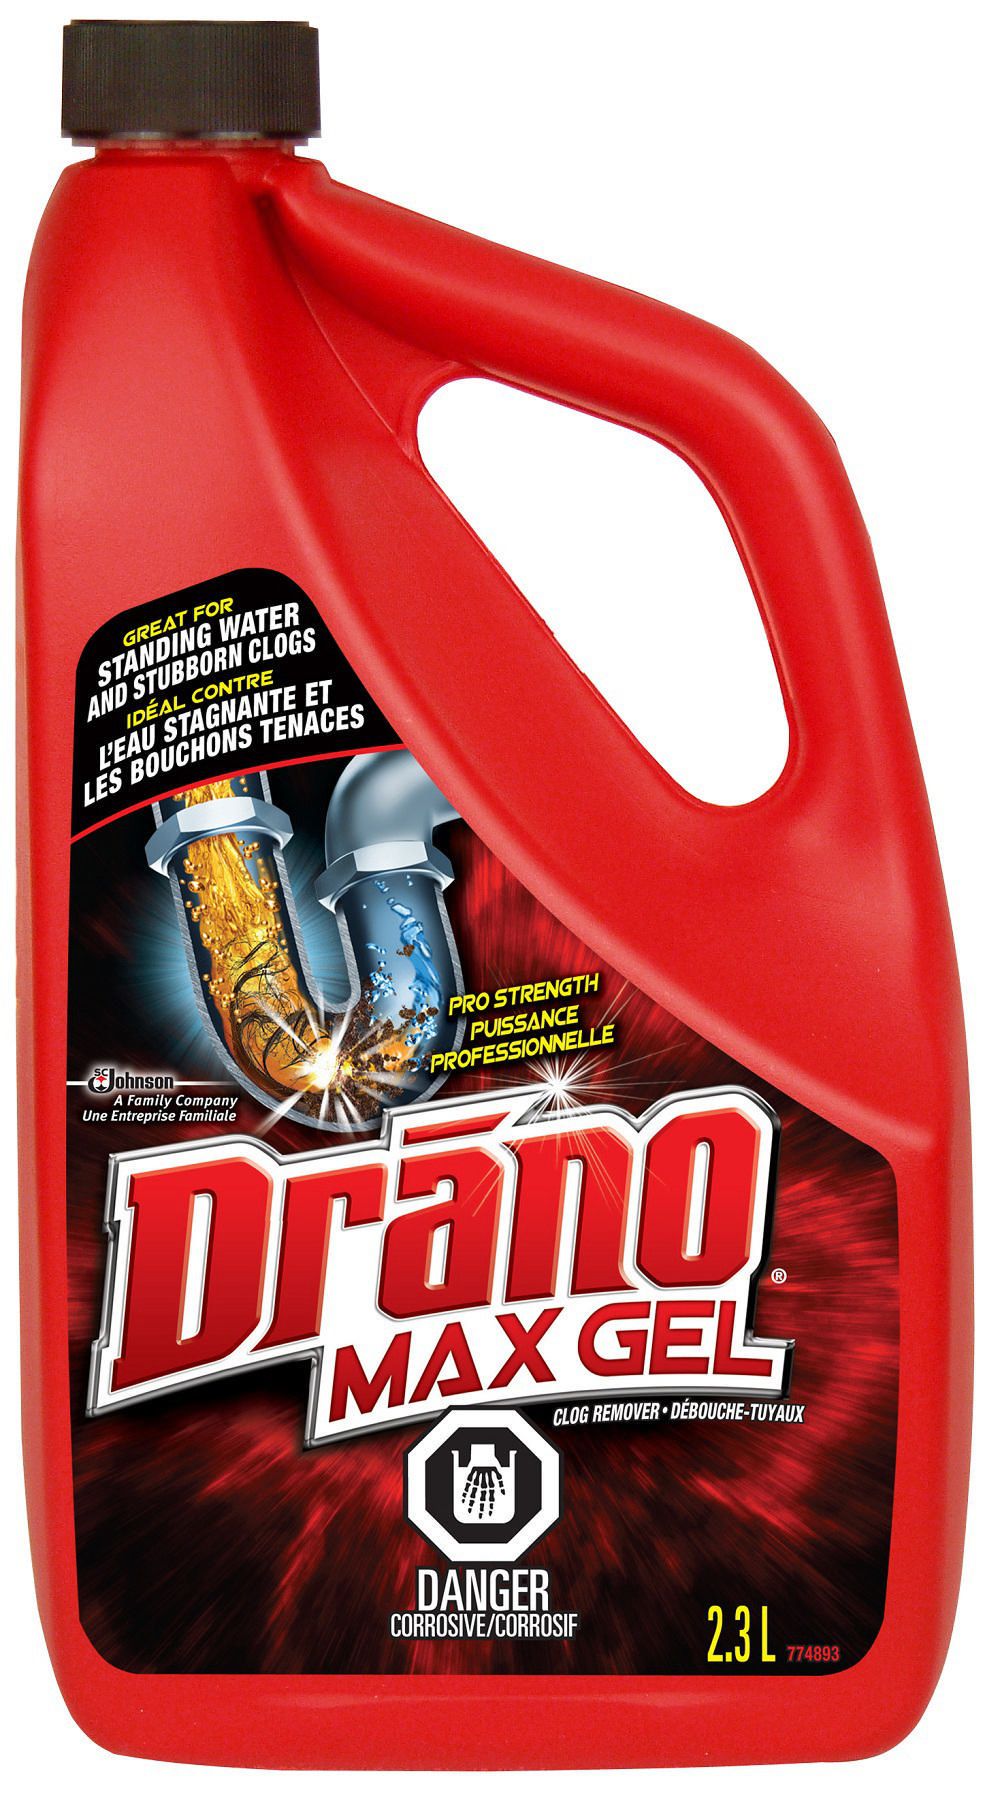 drano max gel instructions